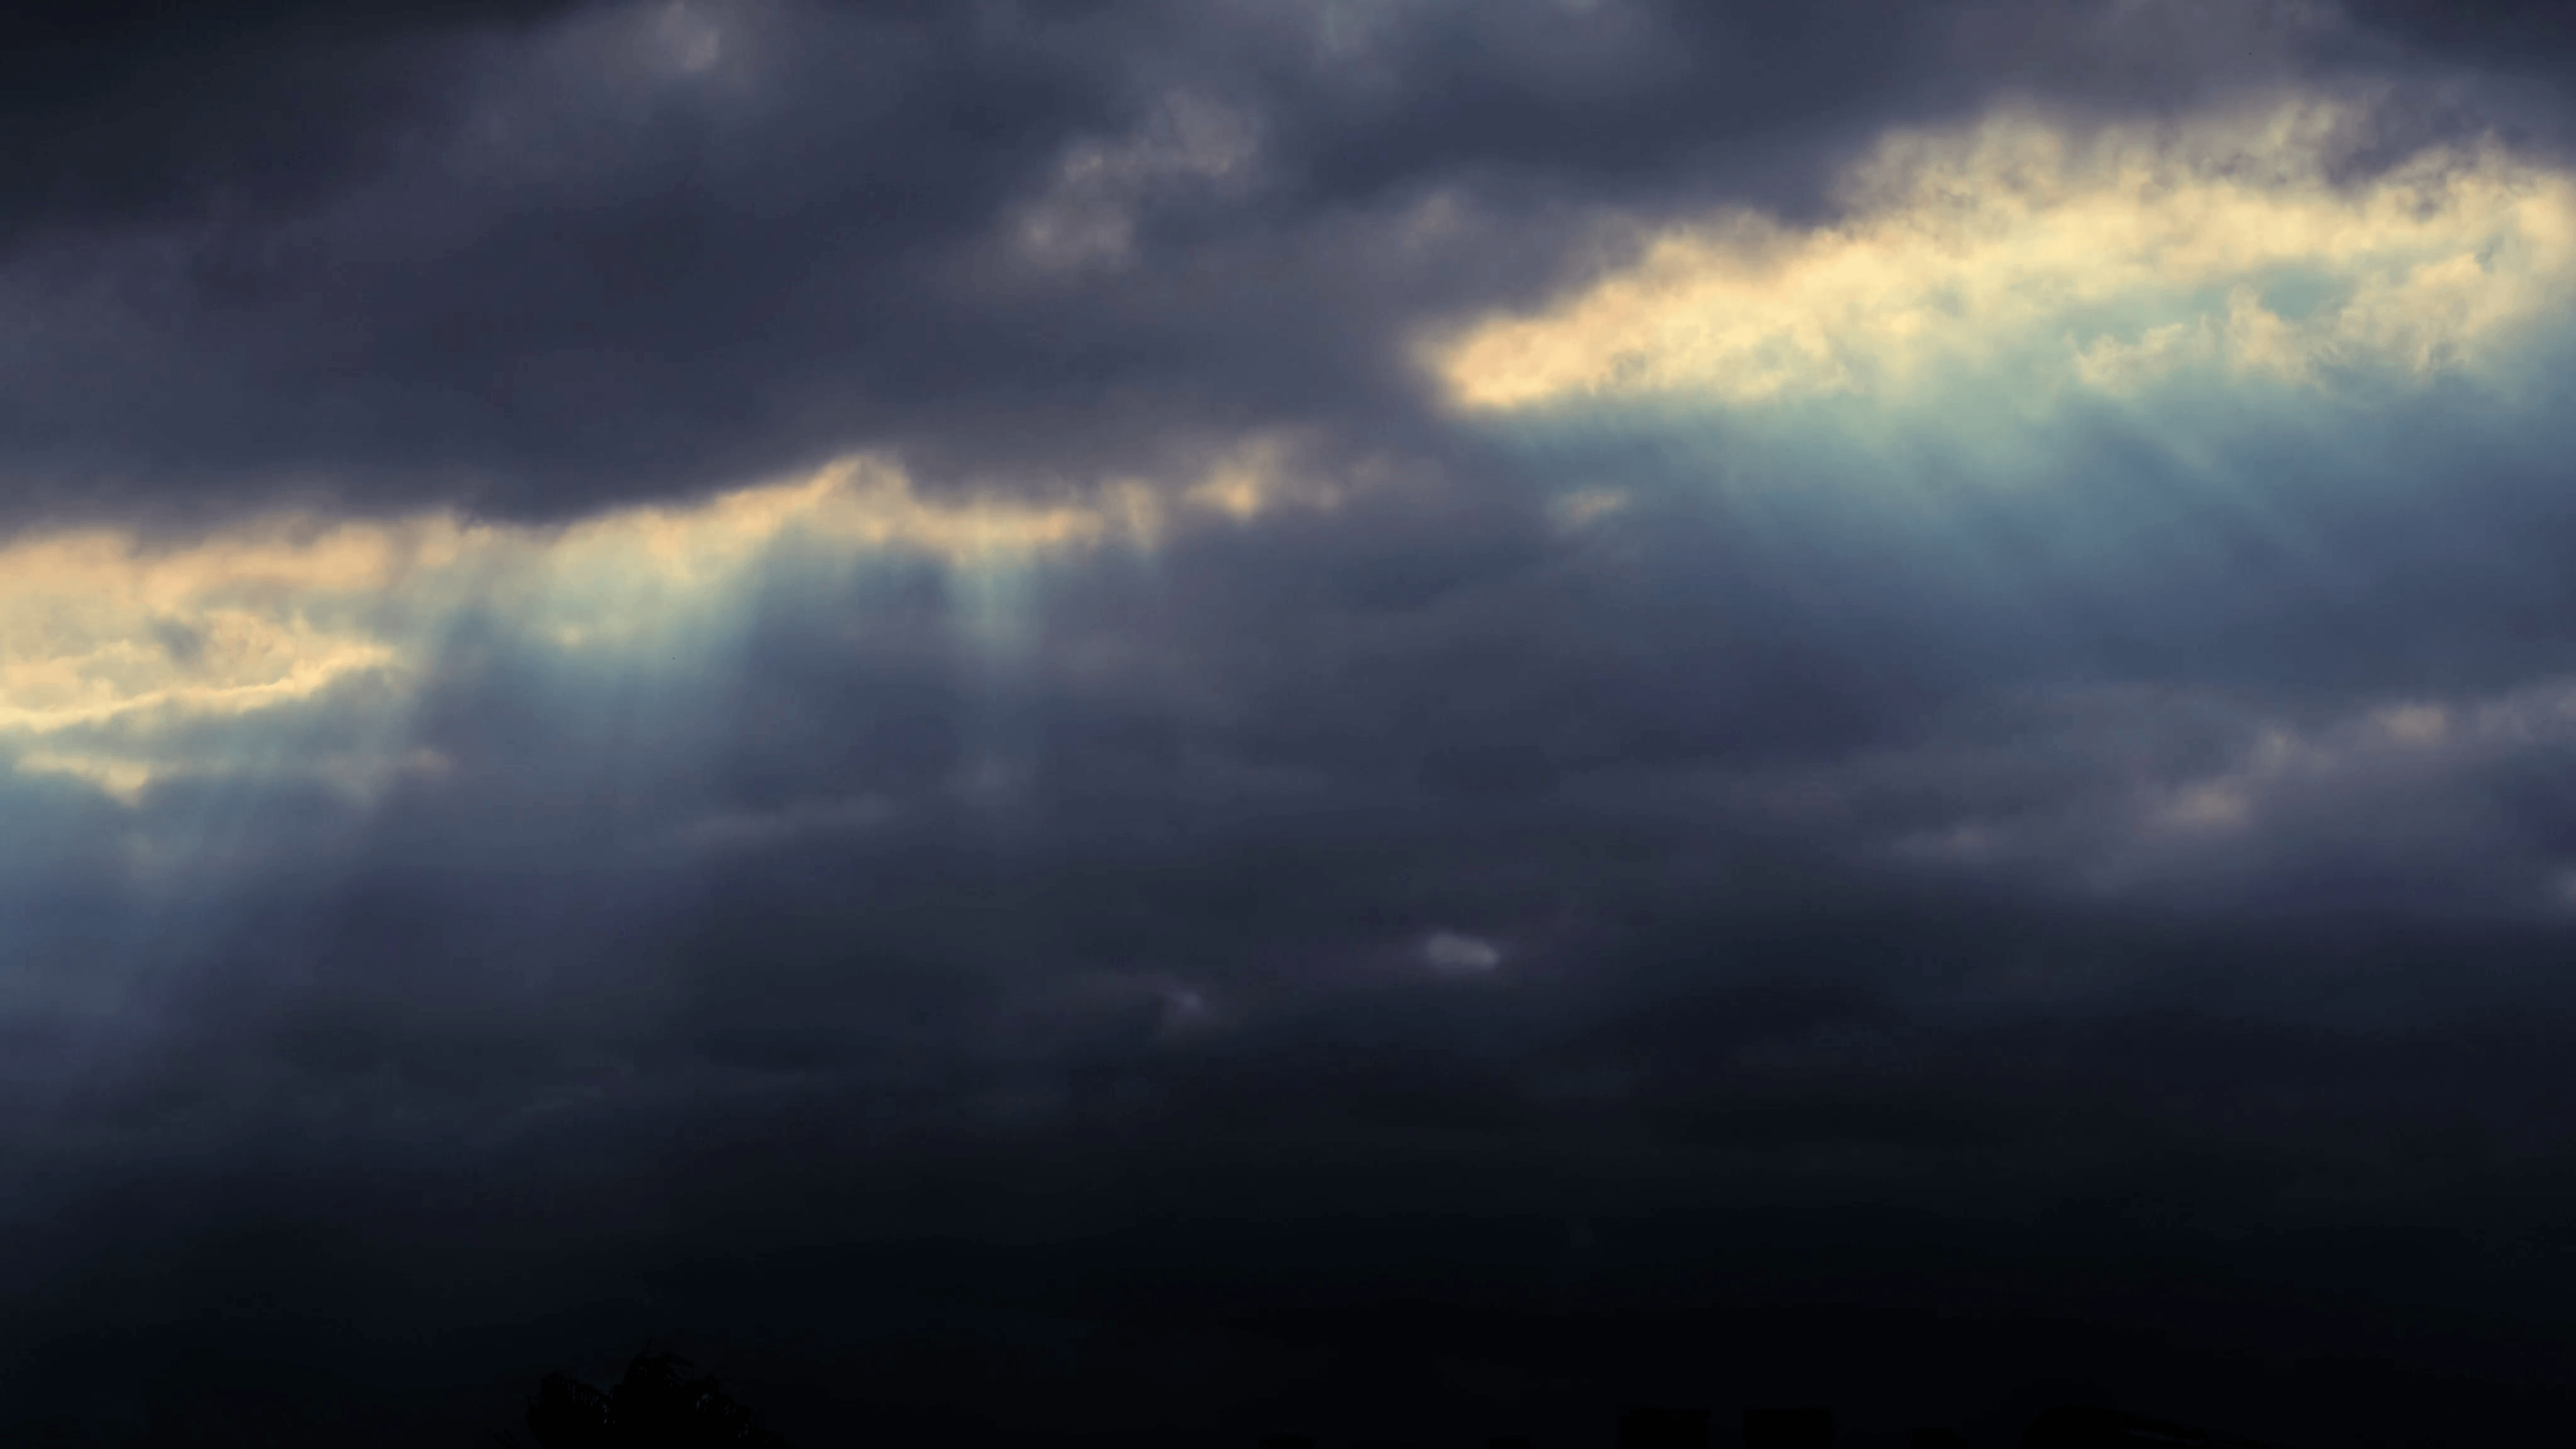 Sunlight rays shining through dramatic rain storm clouds background